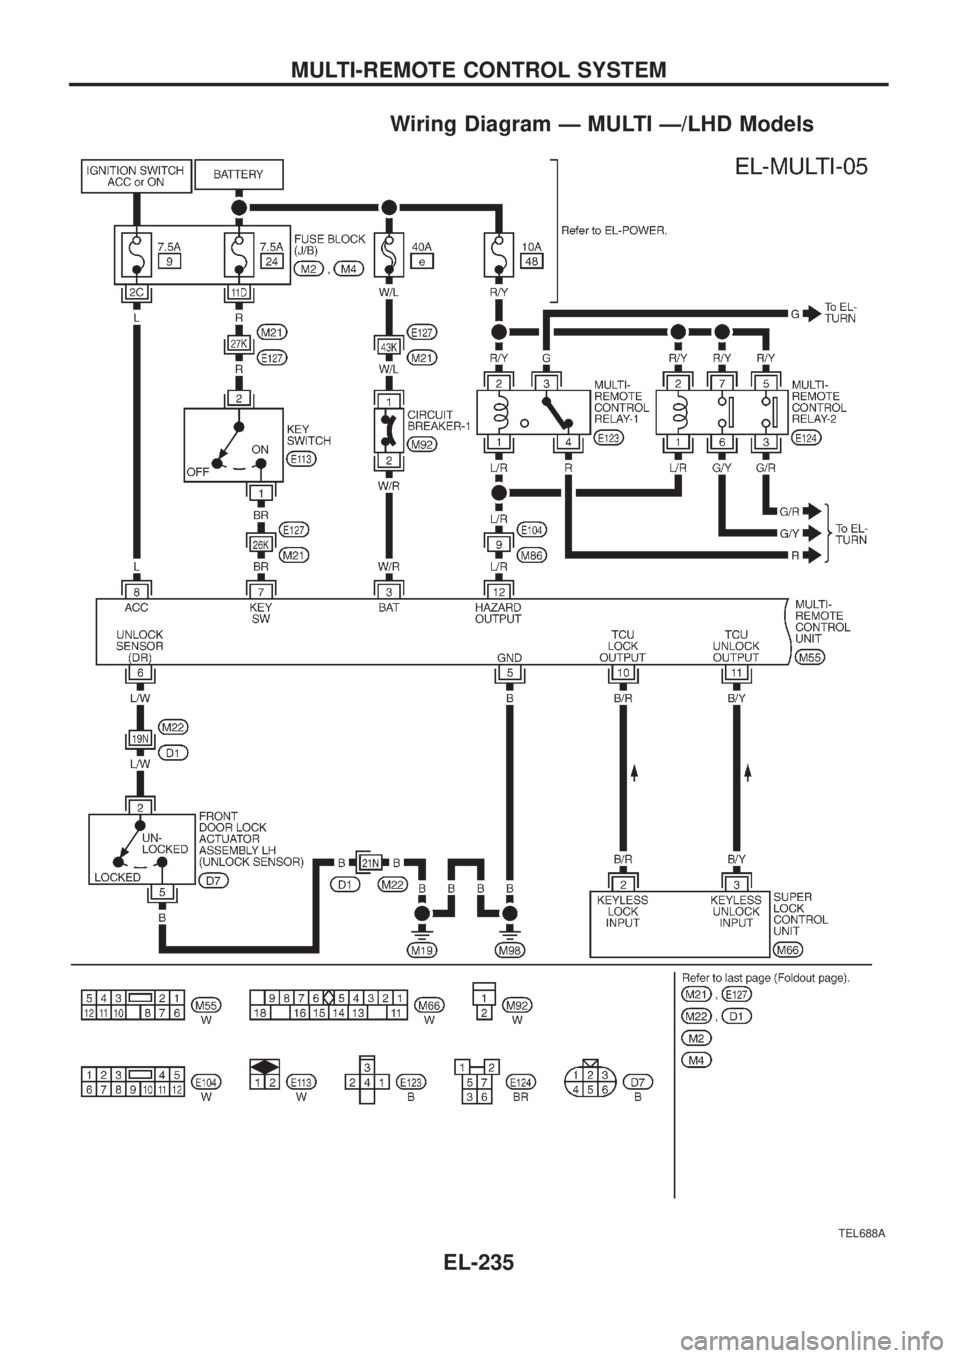 NISSAN PATROL 2006  Service Manual Wiring Diagram Ð MULTI Ð/LHD Models
TEL688A
MULTI-REMOTE CONTROL SYSTEM
EL-235 